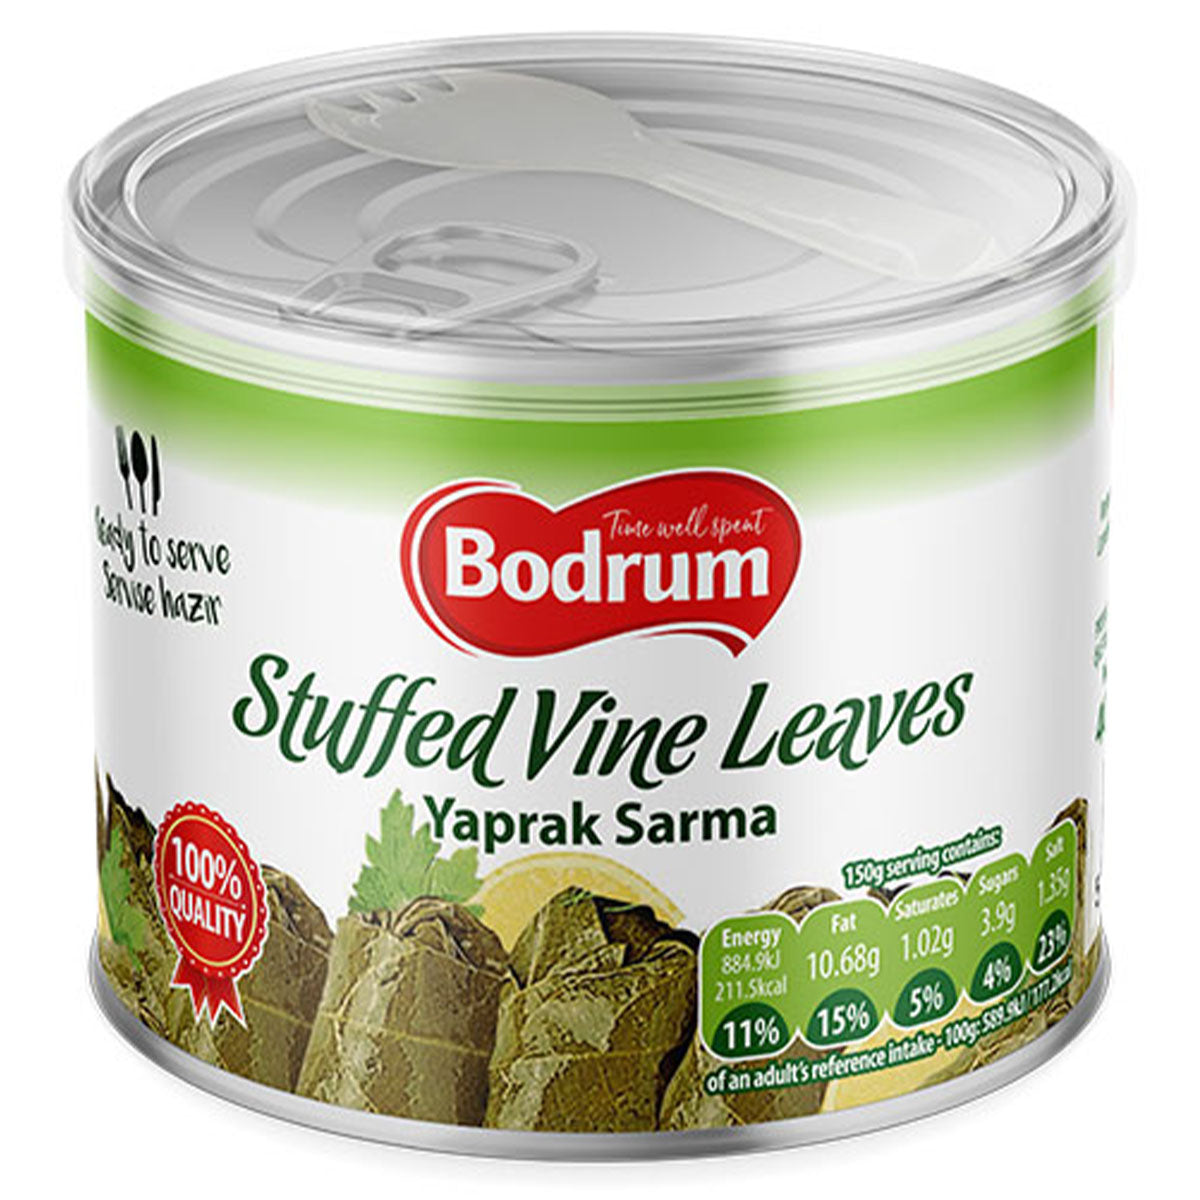 Bodrum - Stuffed Vine Leaves - 400g - Continental Food Store